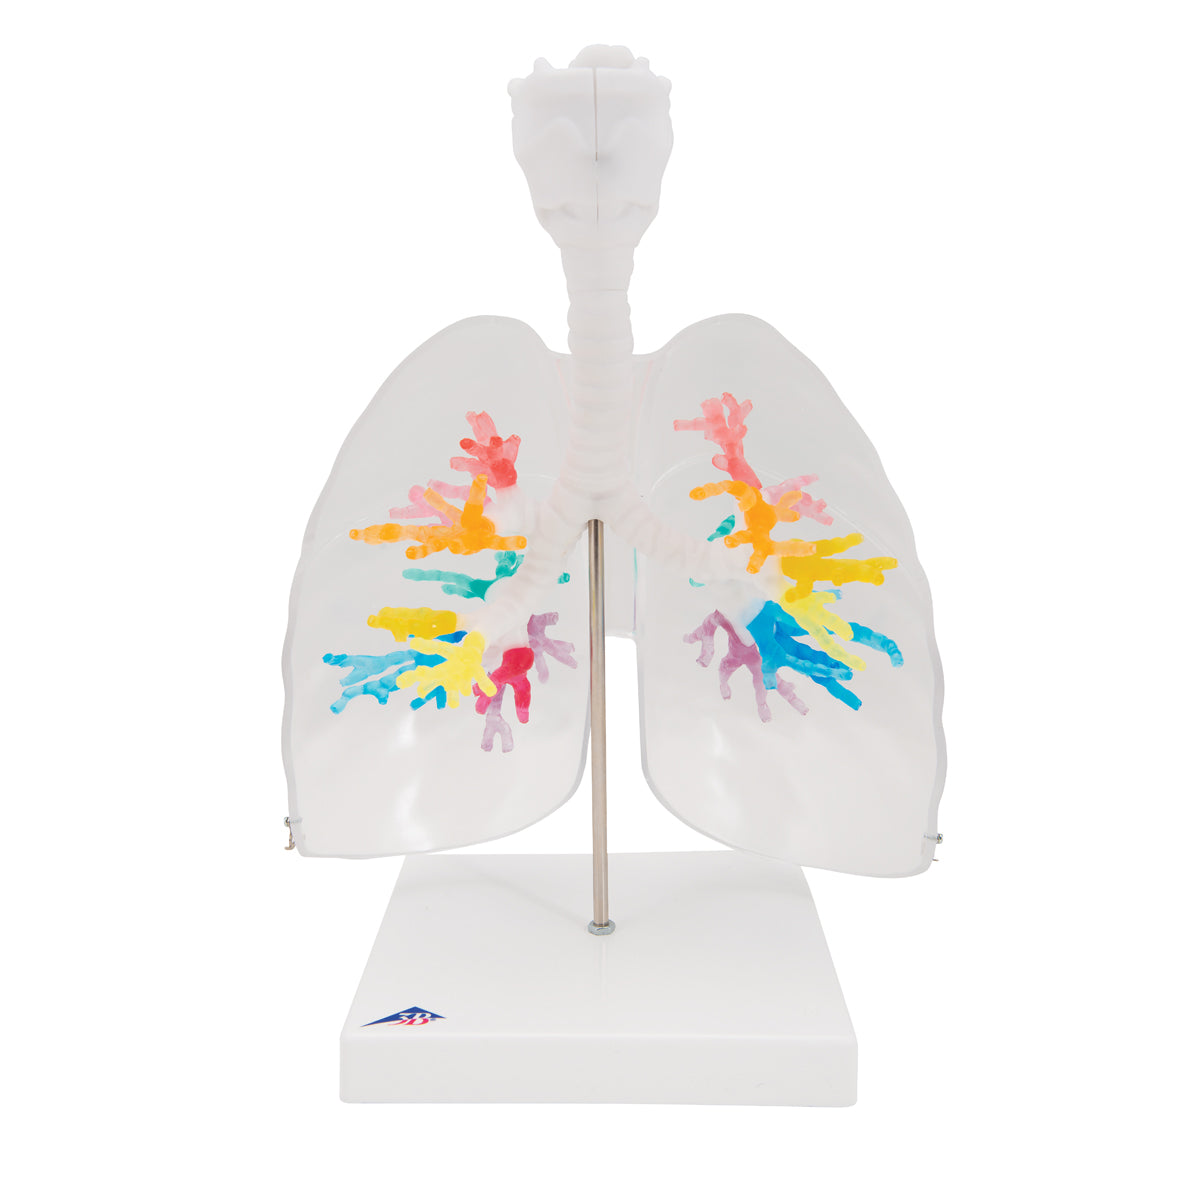 CT bronkier med strube 3D model via tomografisk data med lunger